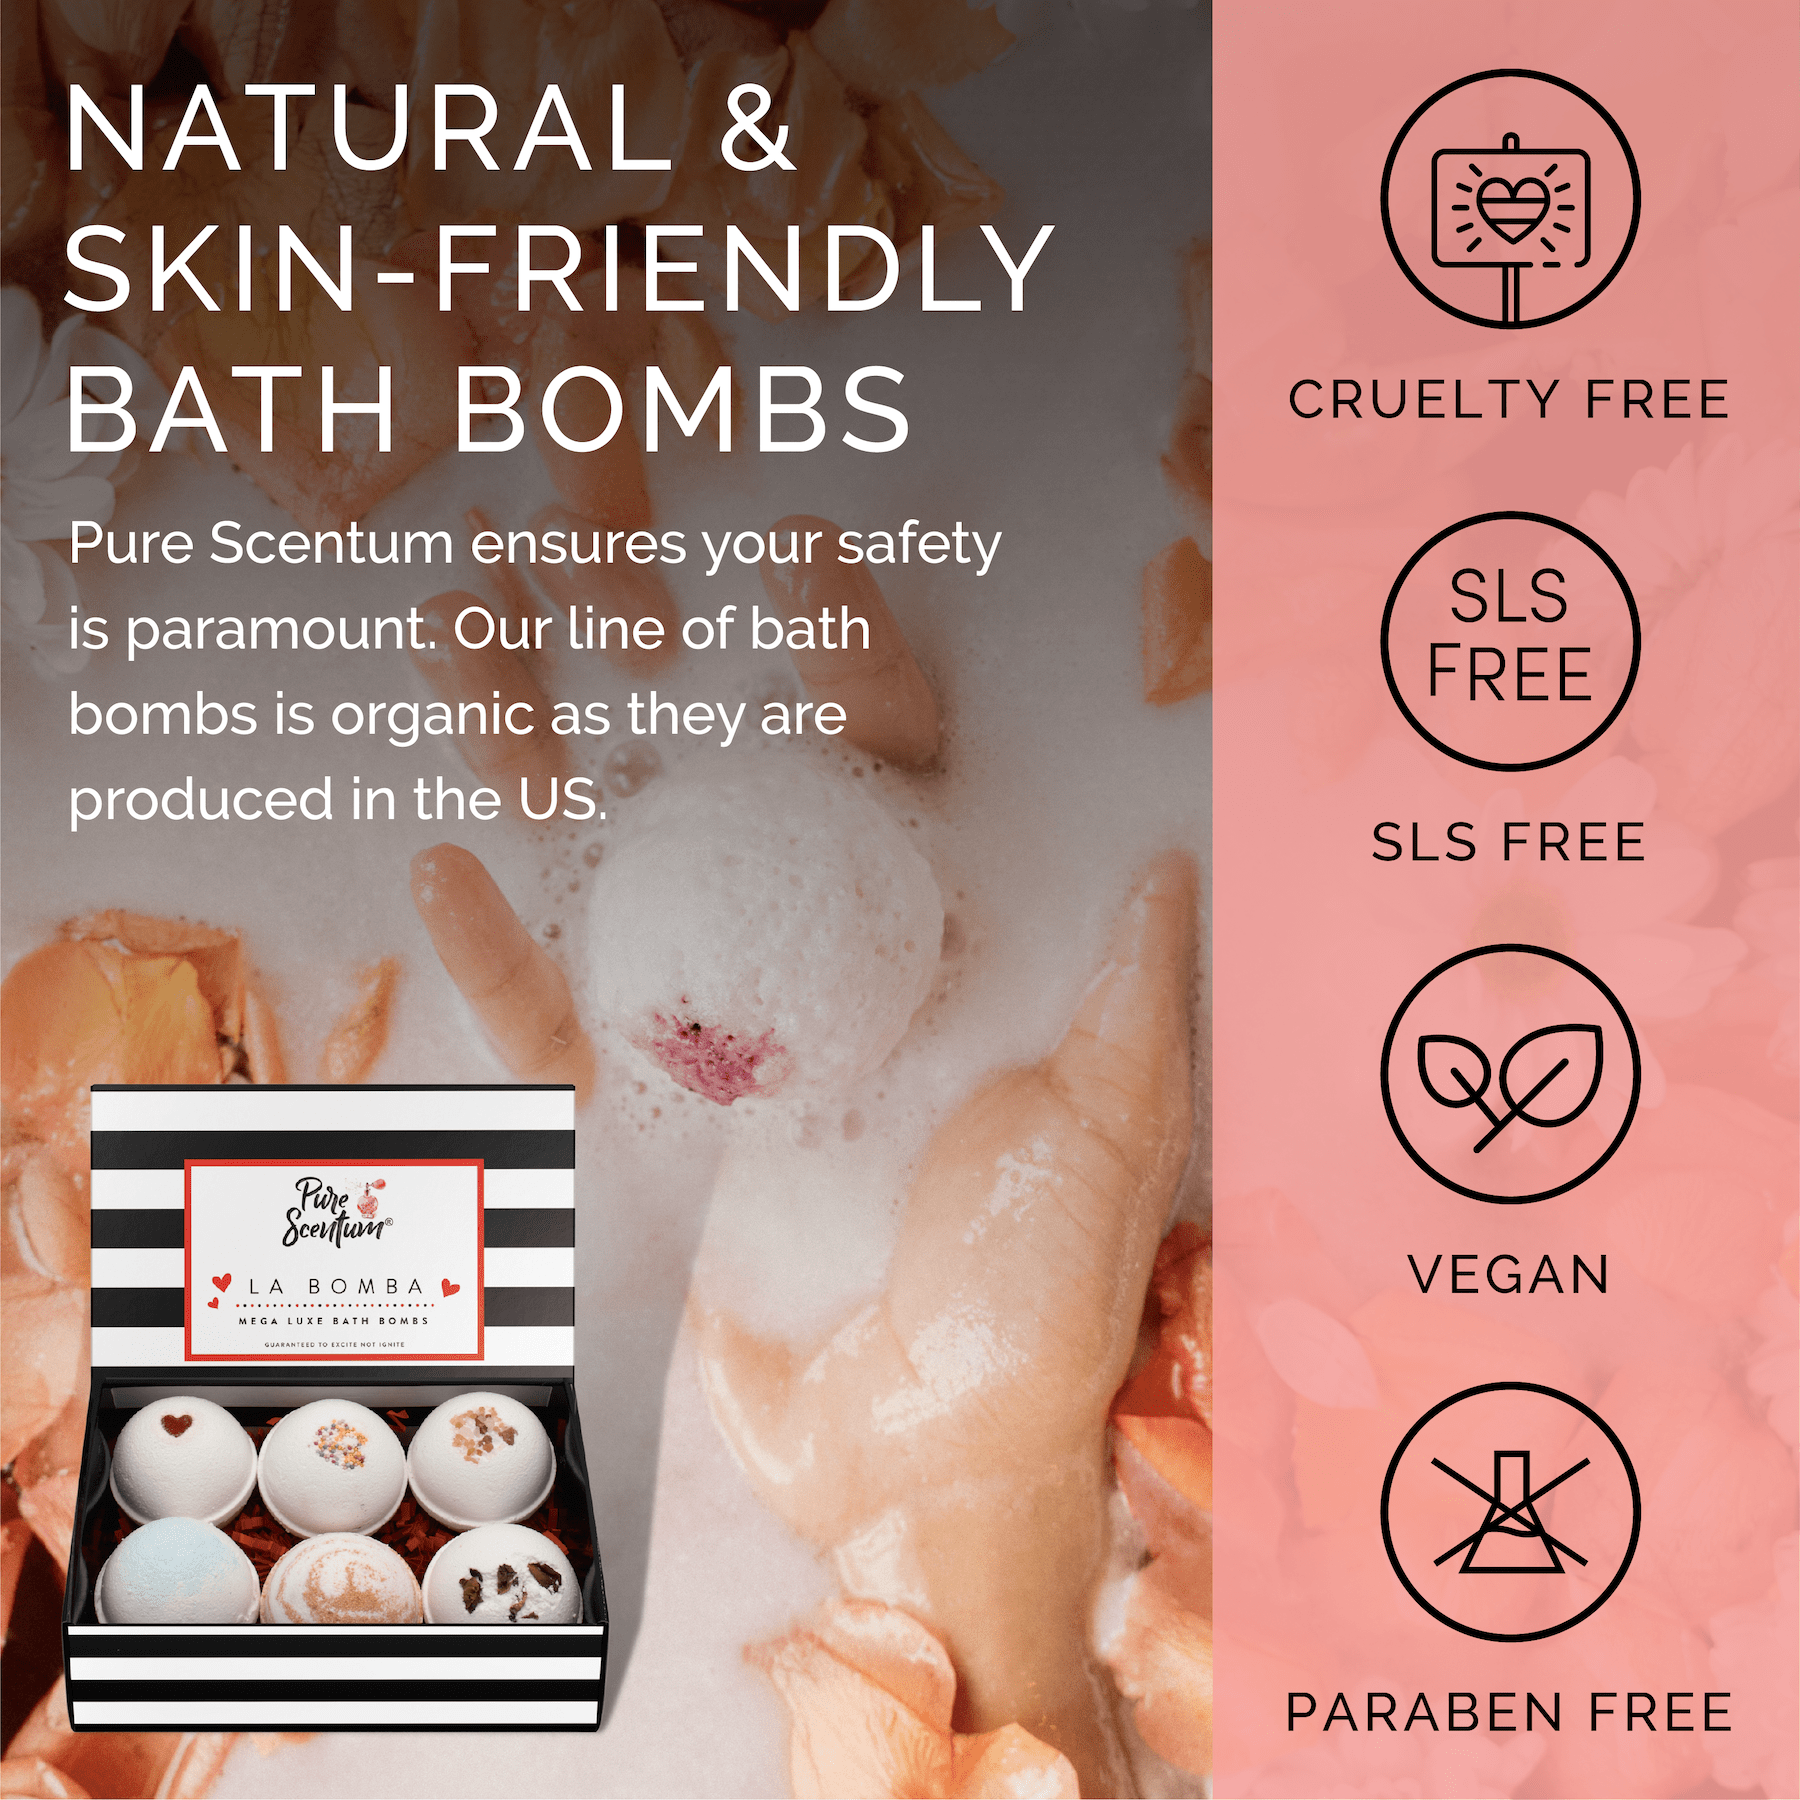 Pure scentum luxury bath bomb features